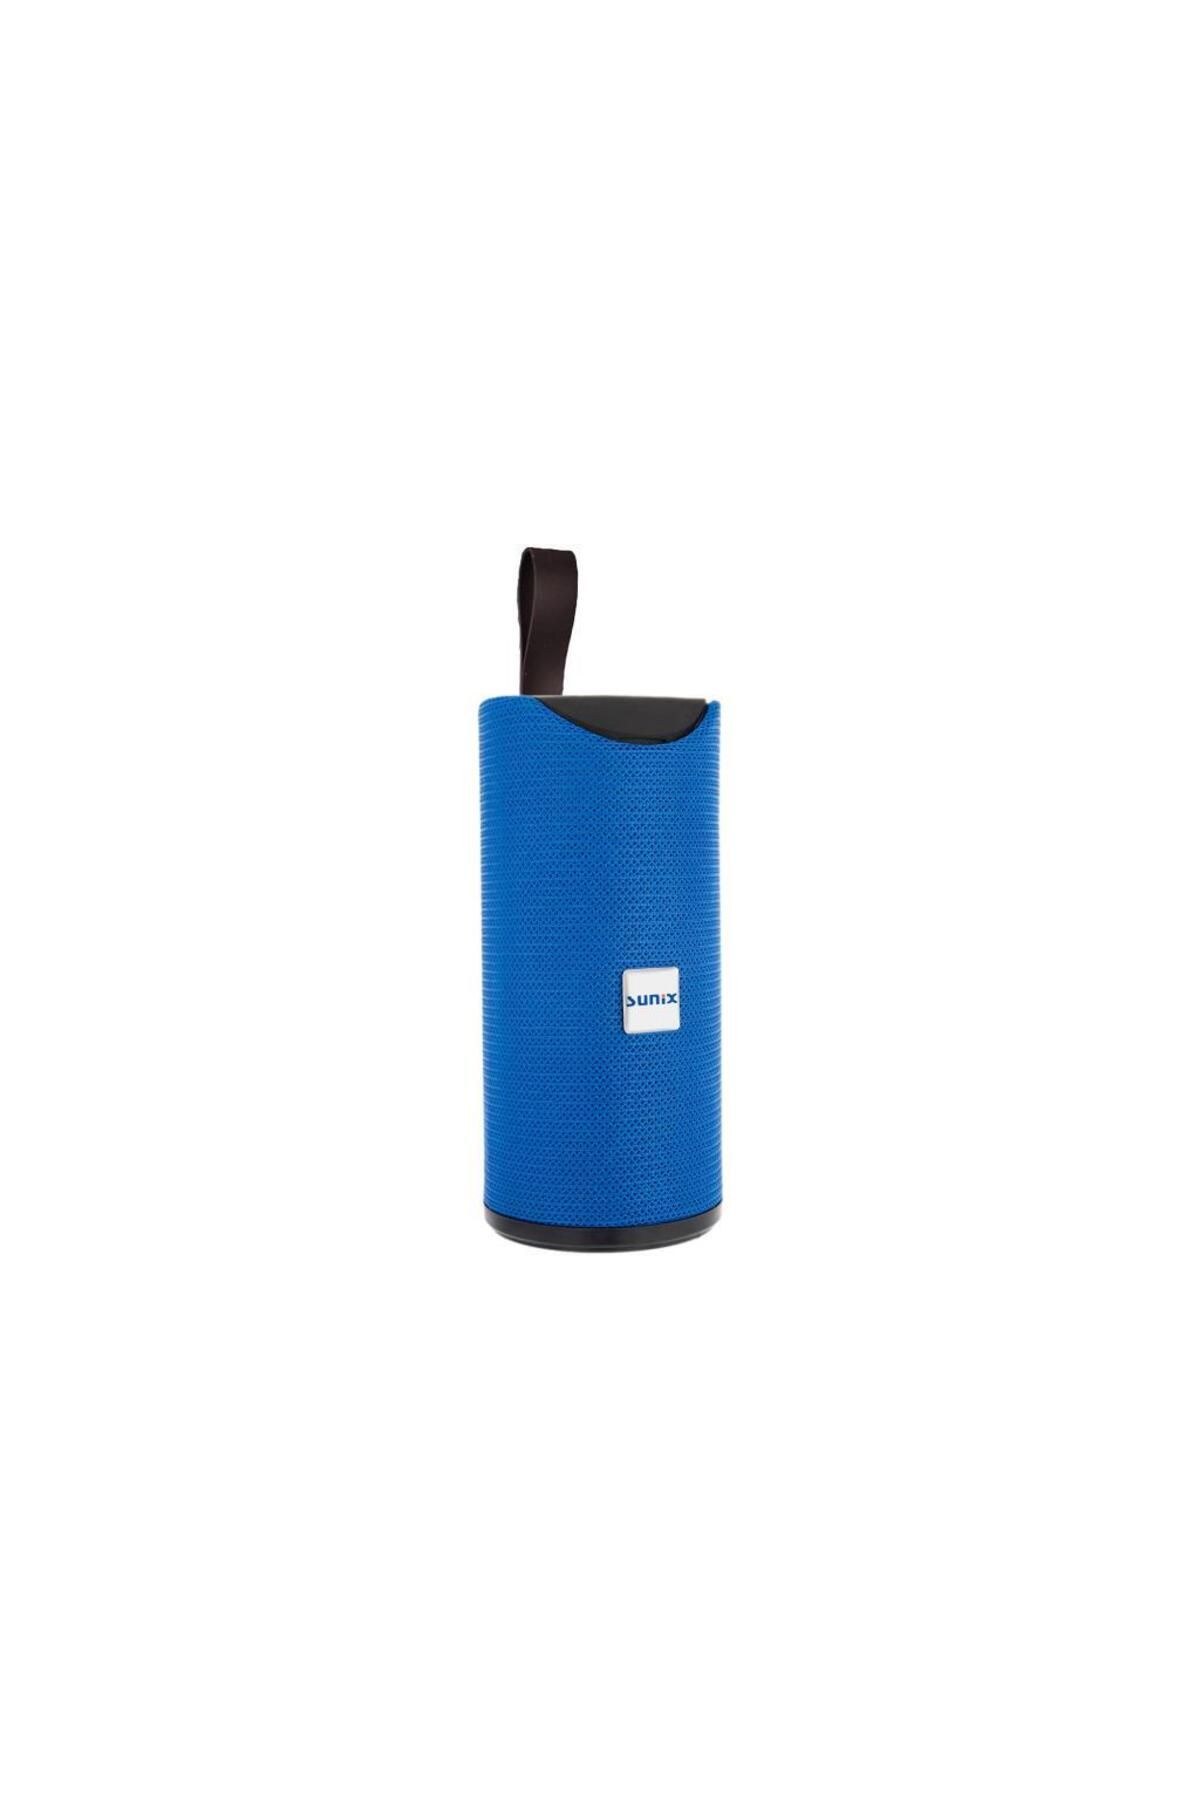 Sunix 10w Bluetooth 4.2 Taşınabilir Bluetooth Hoparlör Mavi Bts-33